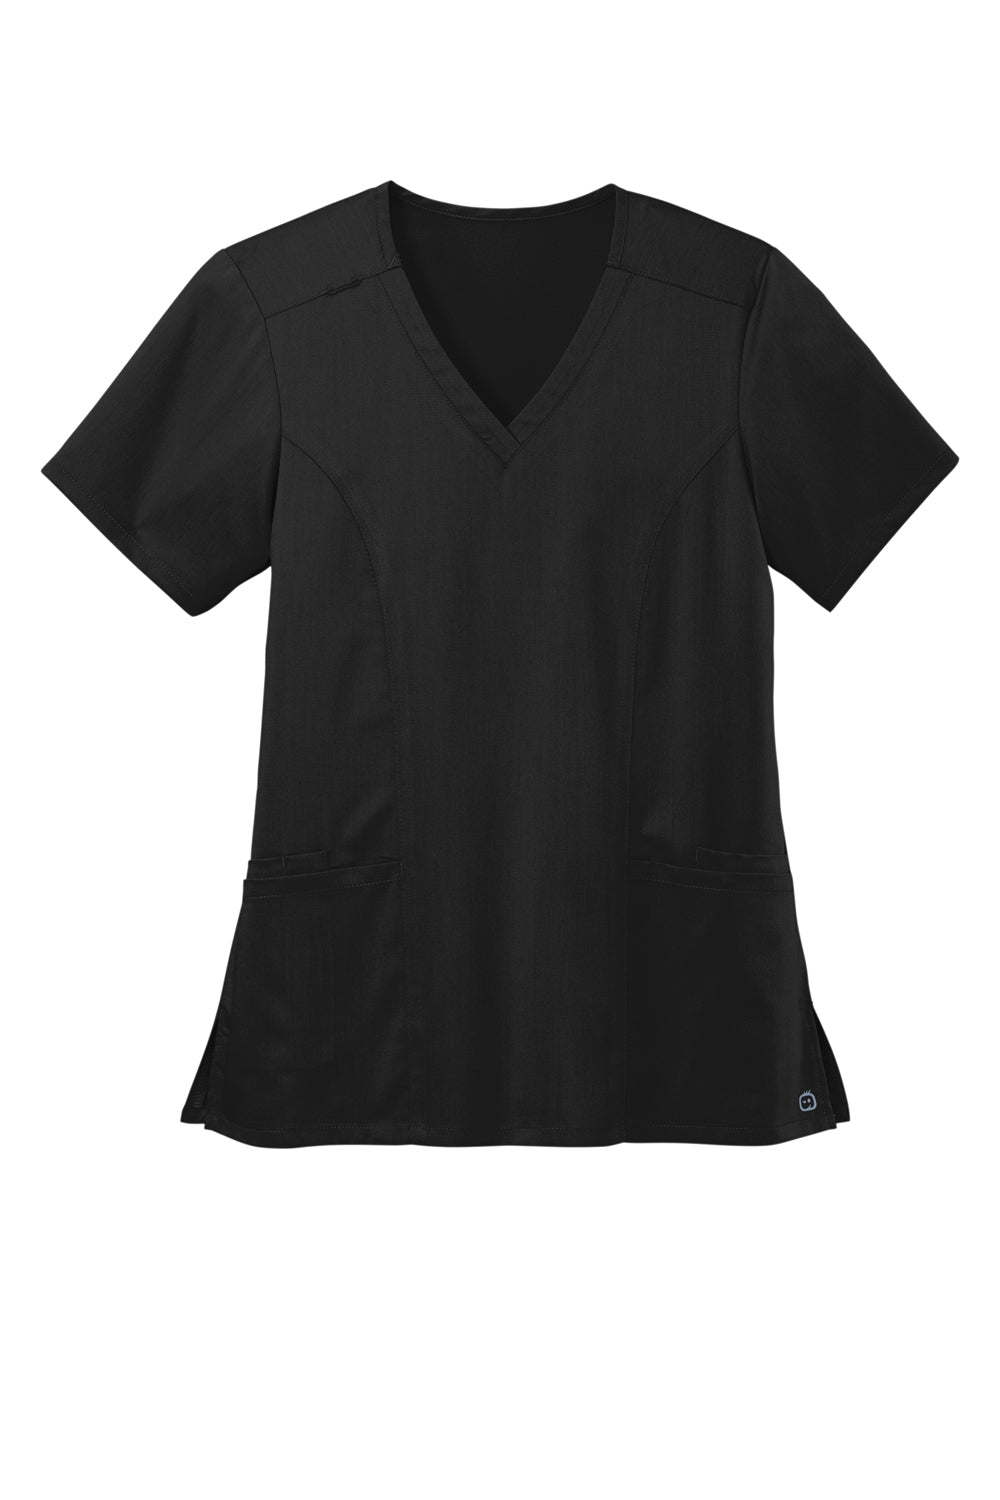 Wonderwink WW4168 Premiere Flex Short Sleeve V-Neck Shirt w/ Pockets Black Flat Front